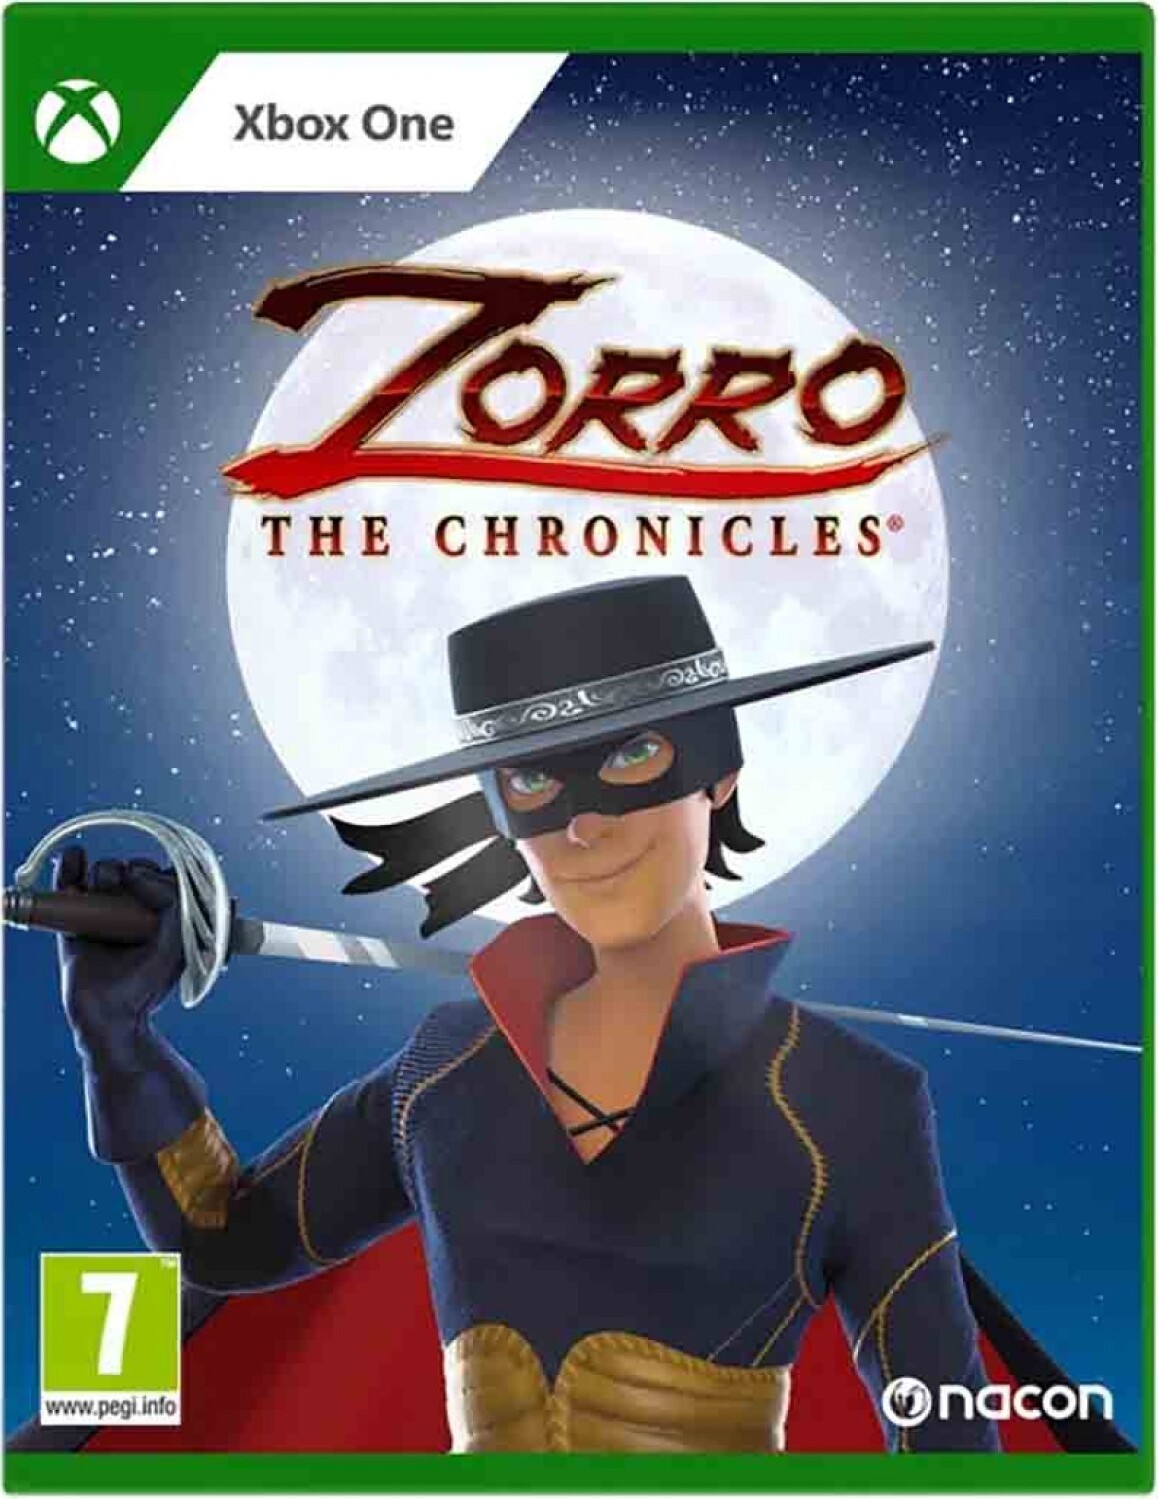 2: Zorro: The Chronicles - Xbox One